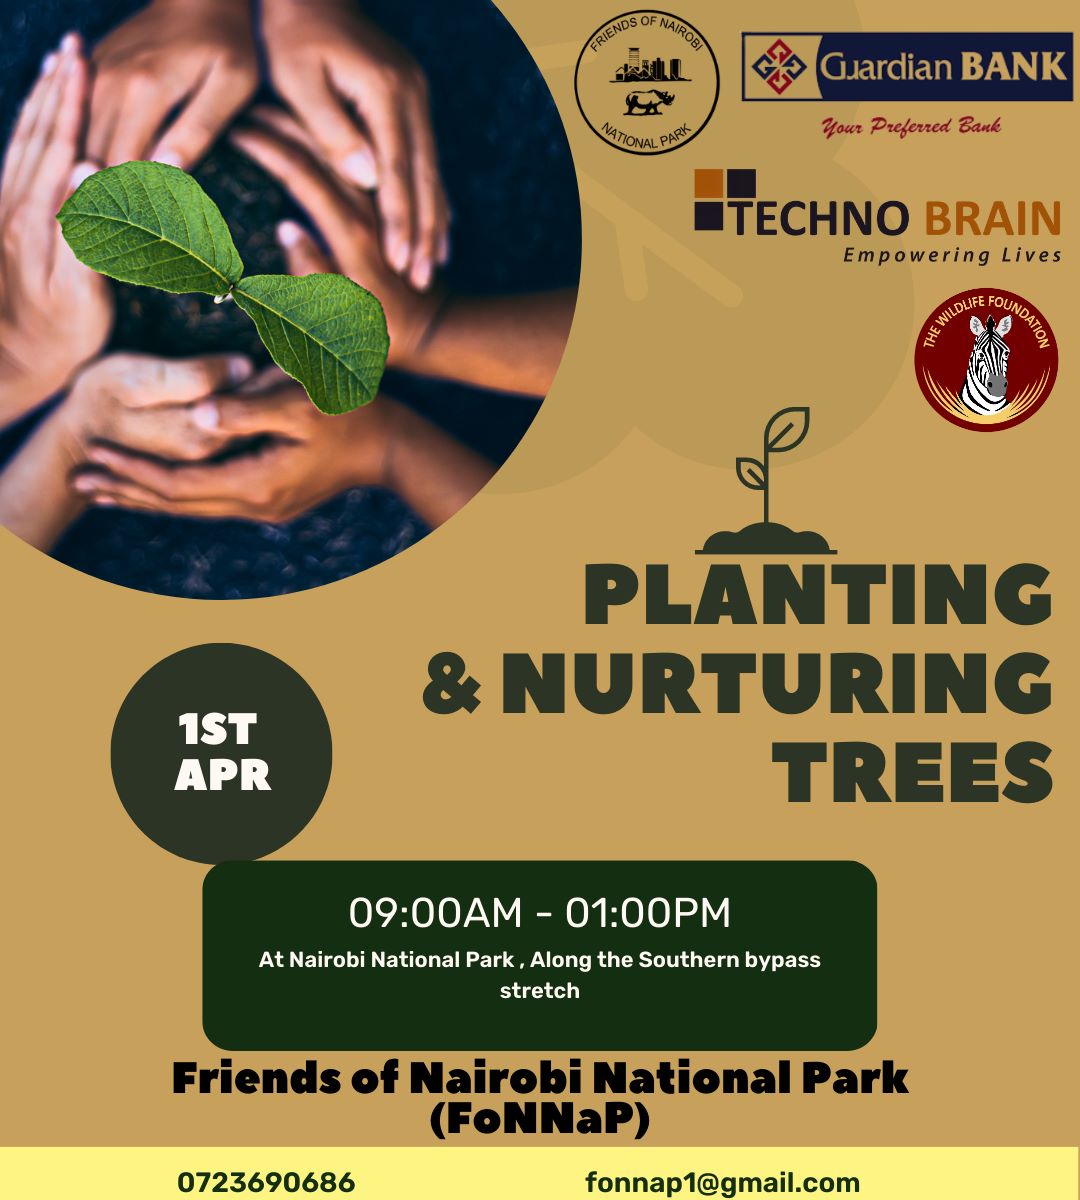 Let's Plant & Nurture Trees